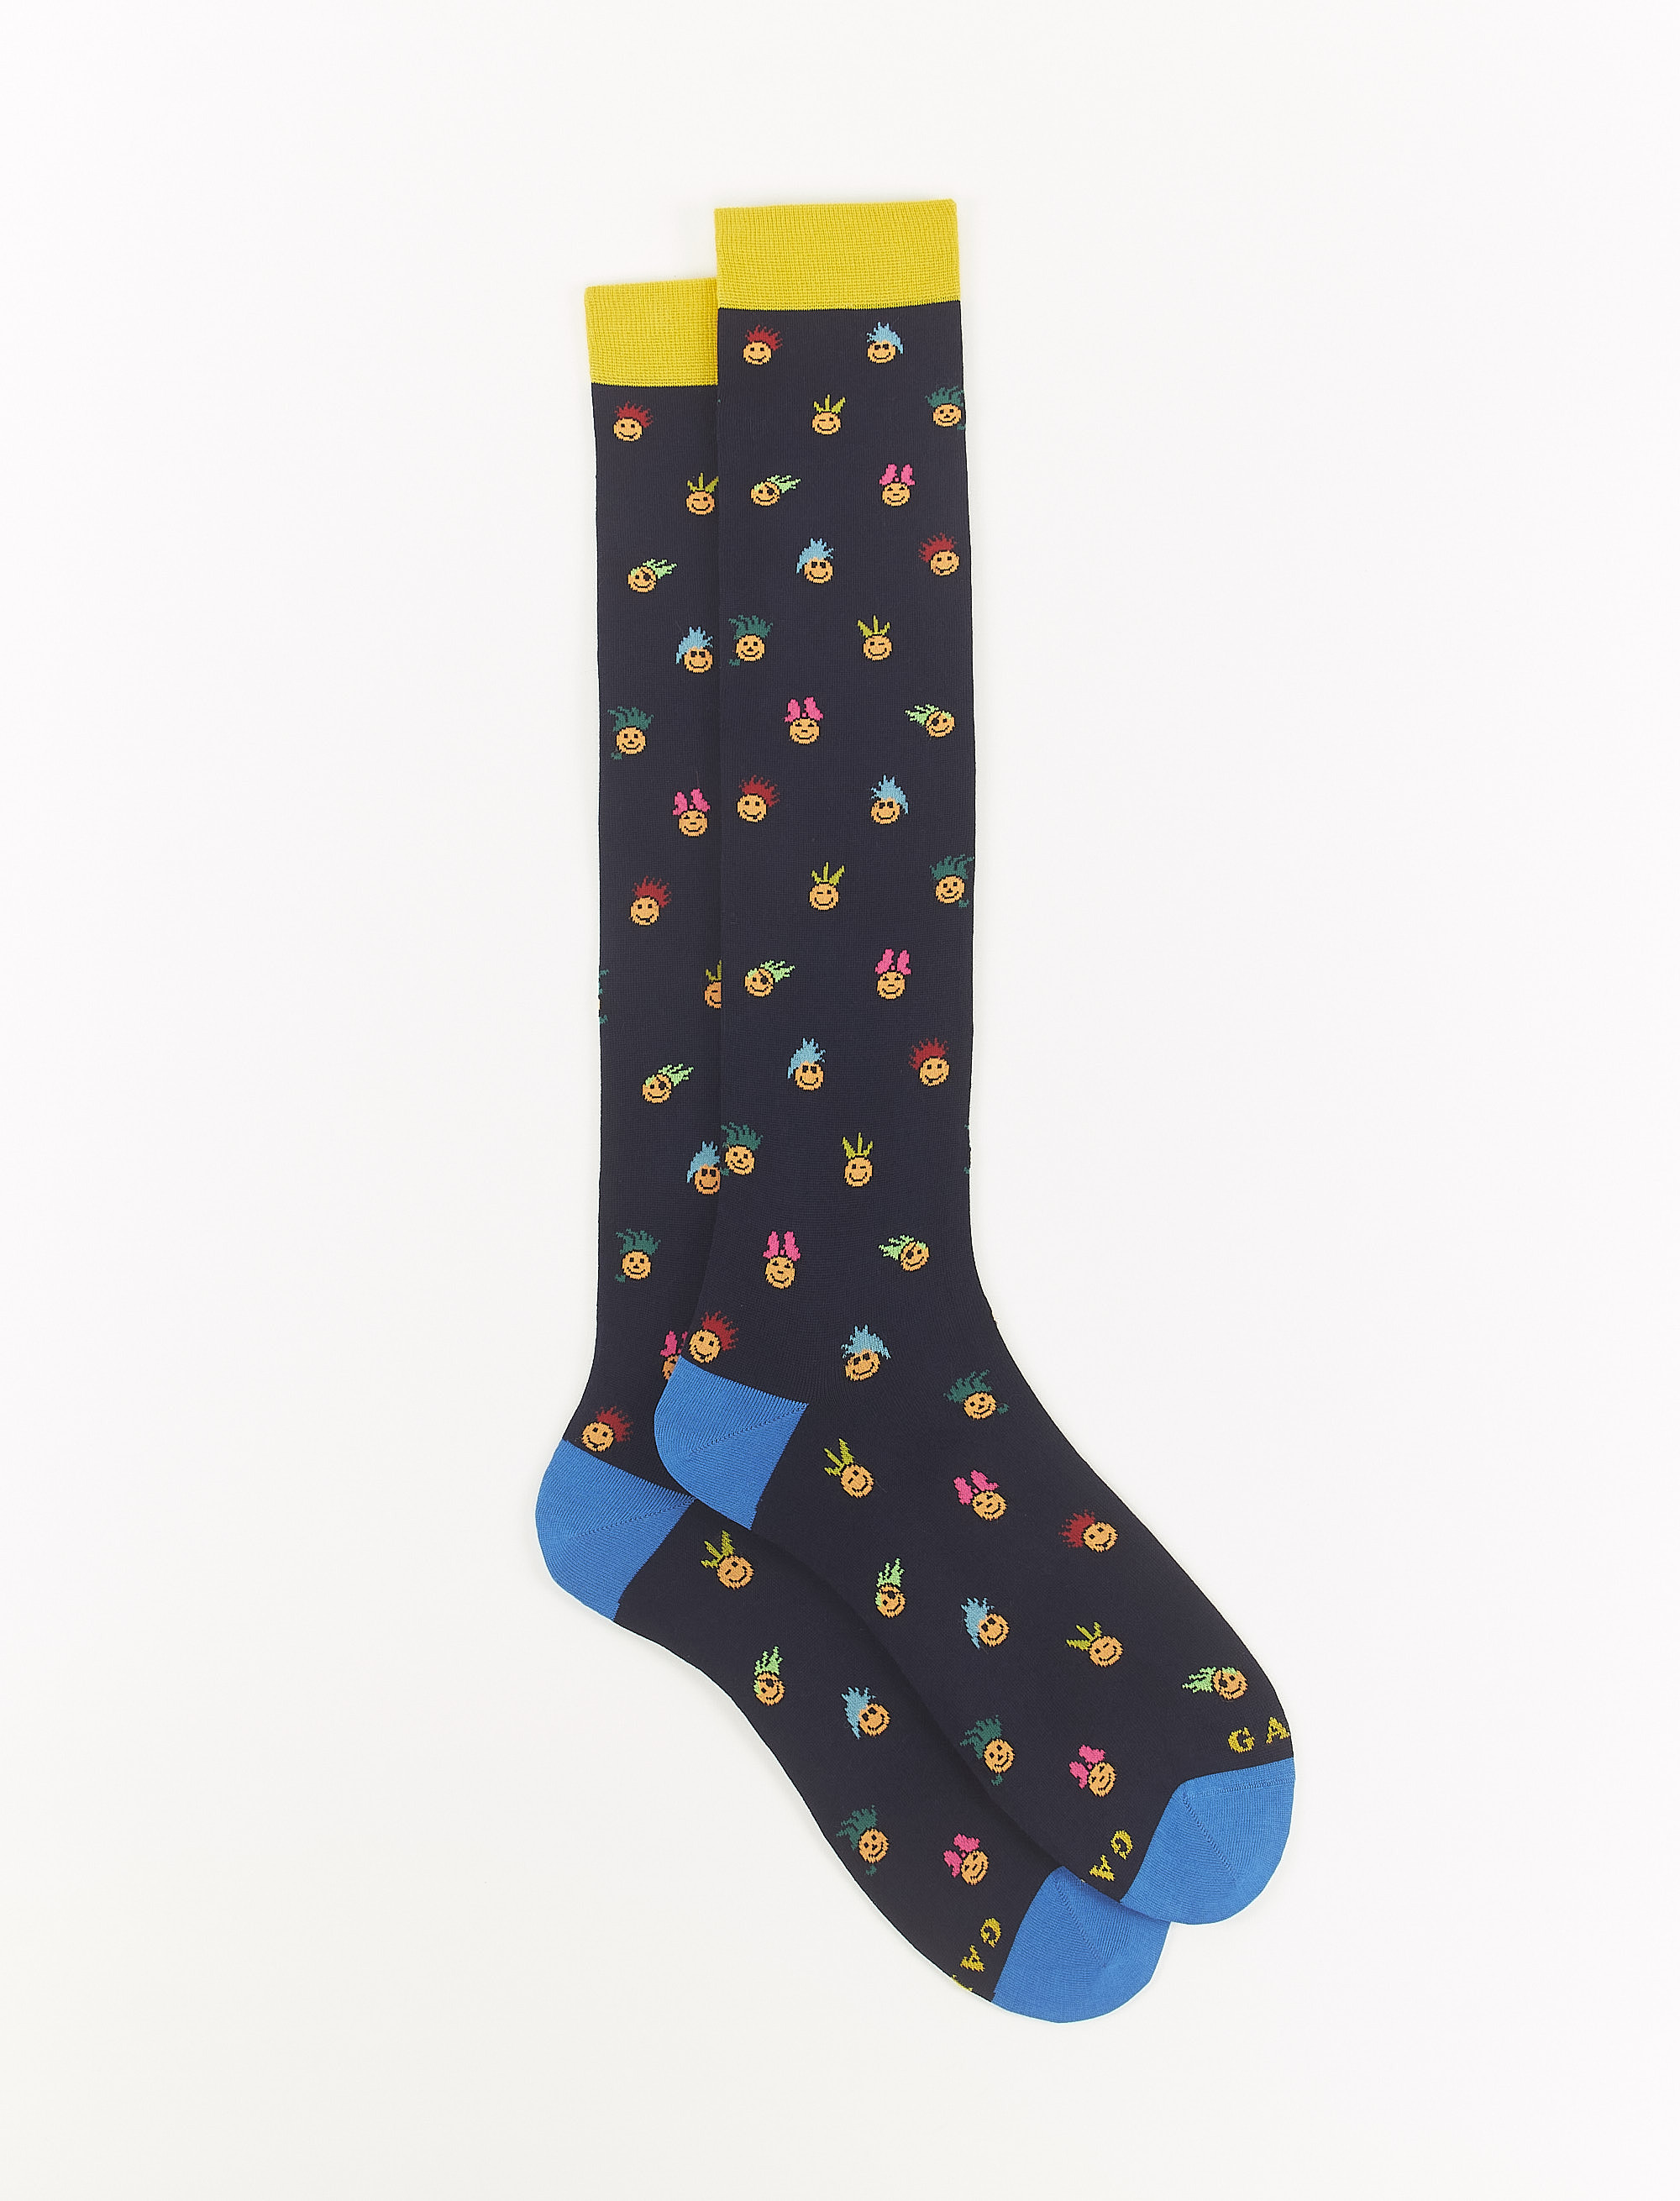 Women's long ocean blue light cotton socks with emoji motif - The FW Edition | Gallo 1927 - Official Online Shop